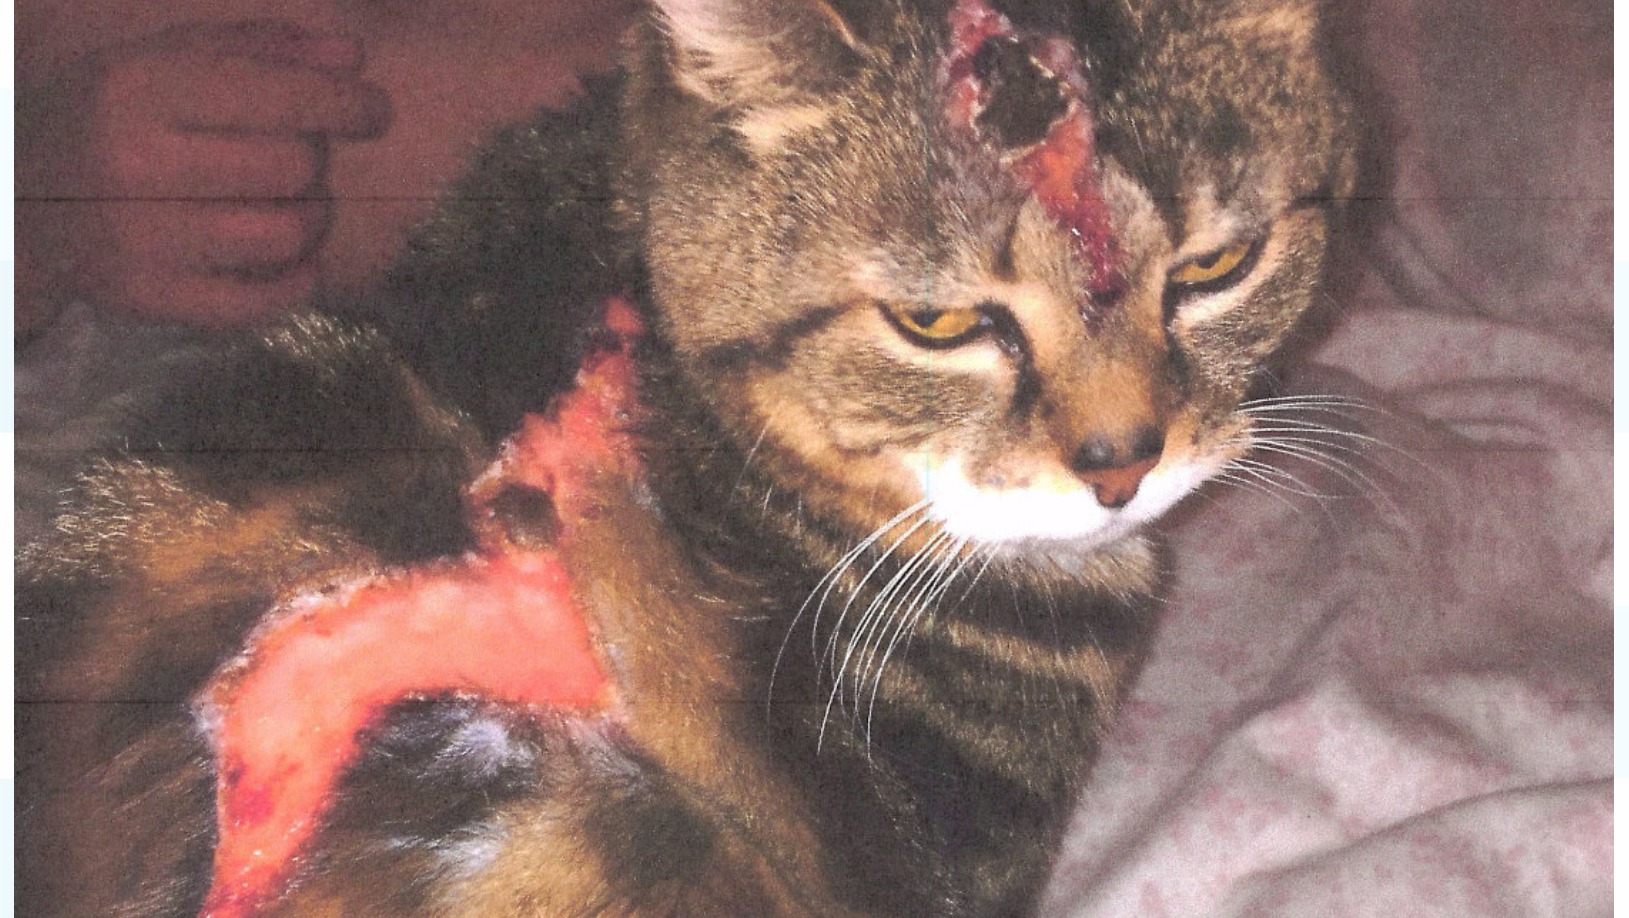 organiseren Eekhoorn melk wit Man jailed for throwing boiling water on neighbour's cat | ITV News Central